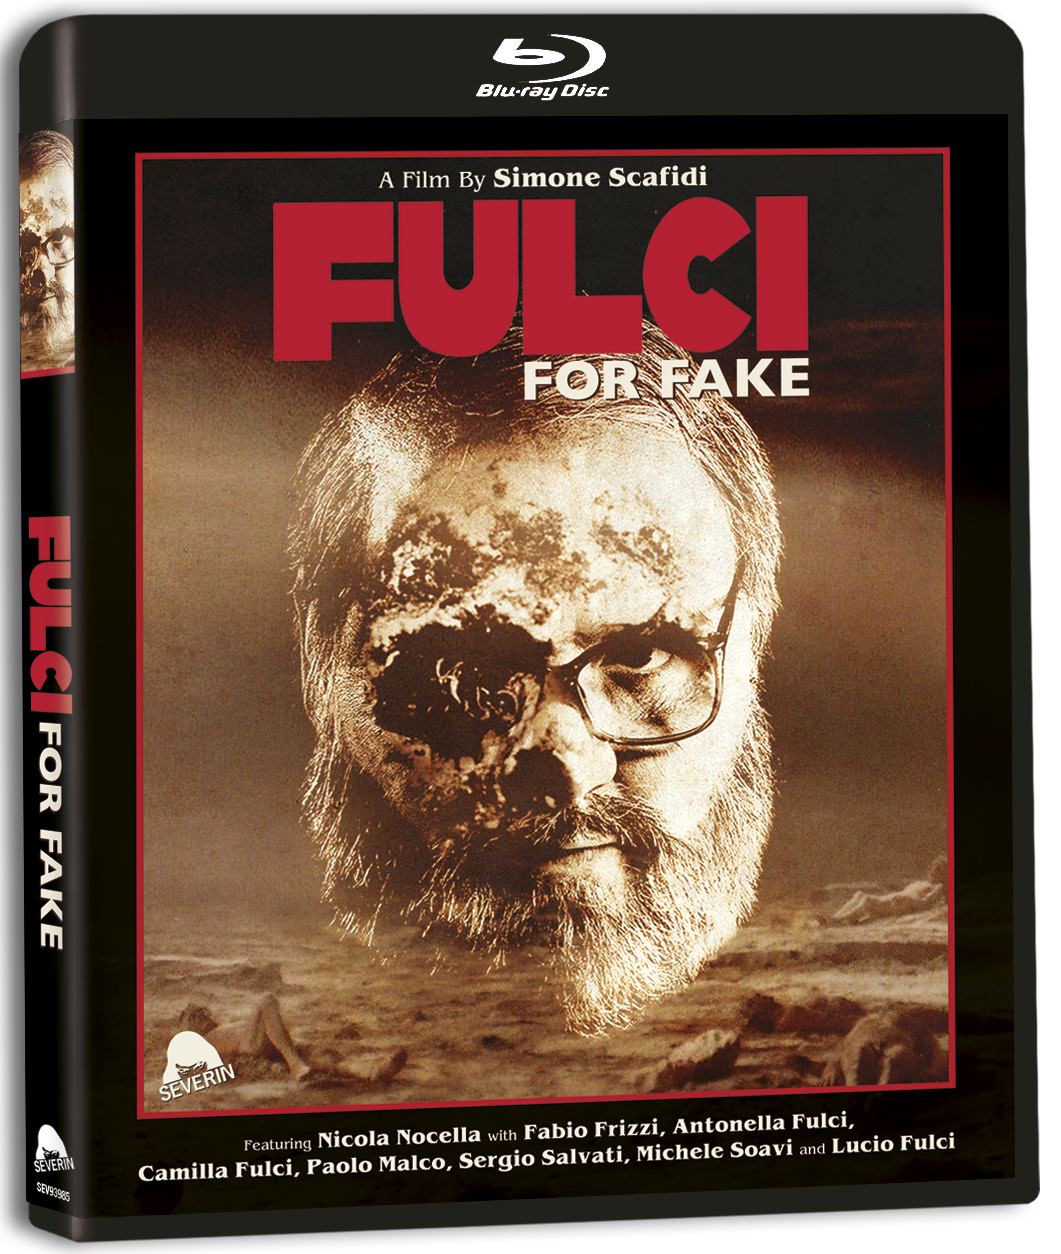 Fulci For Fake [Standard Blu-ray]